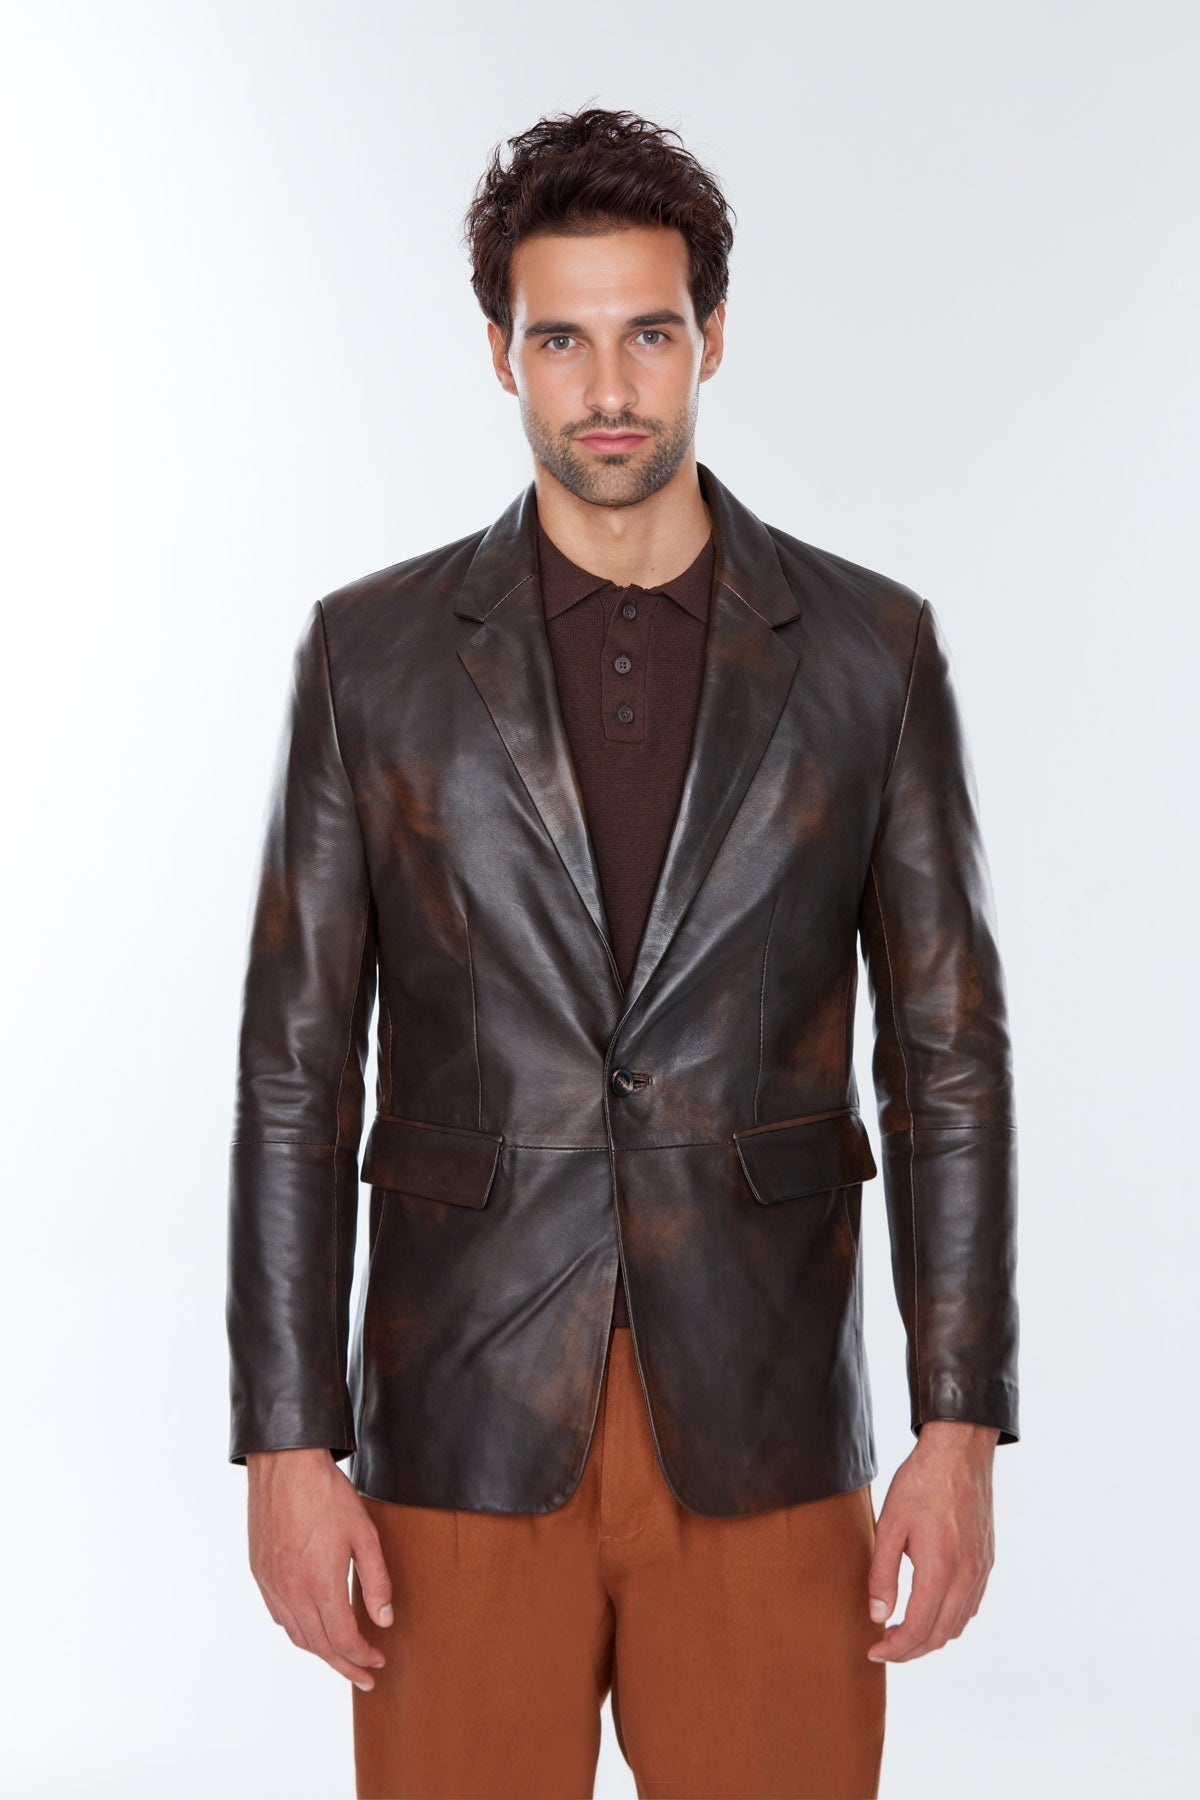 Eriksen Men's Brown Leather Jacket